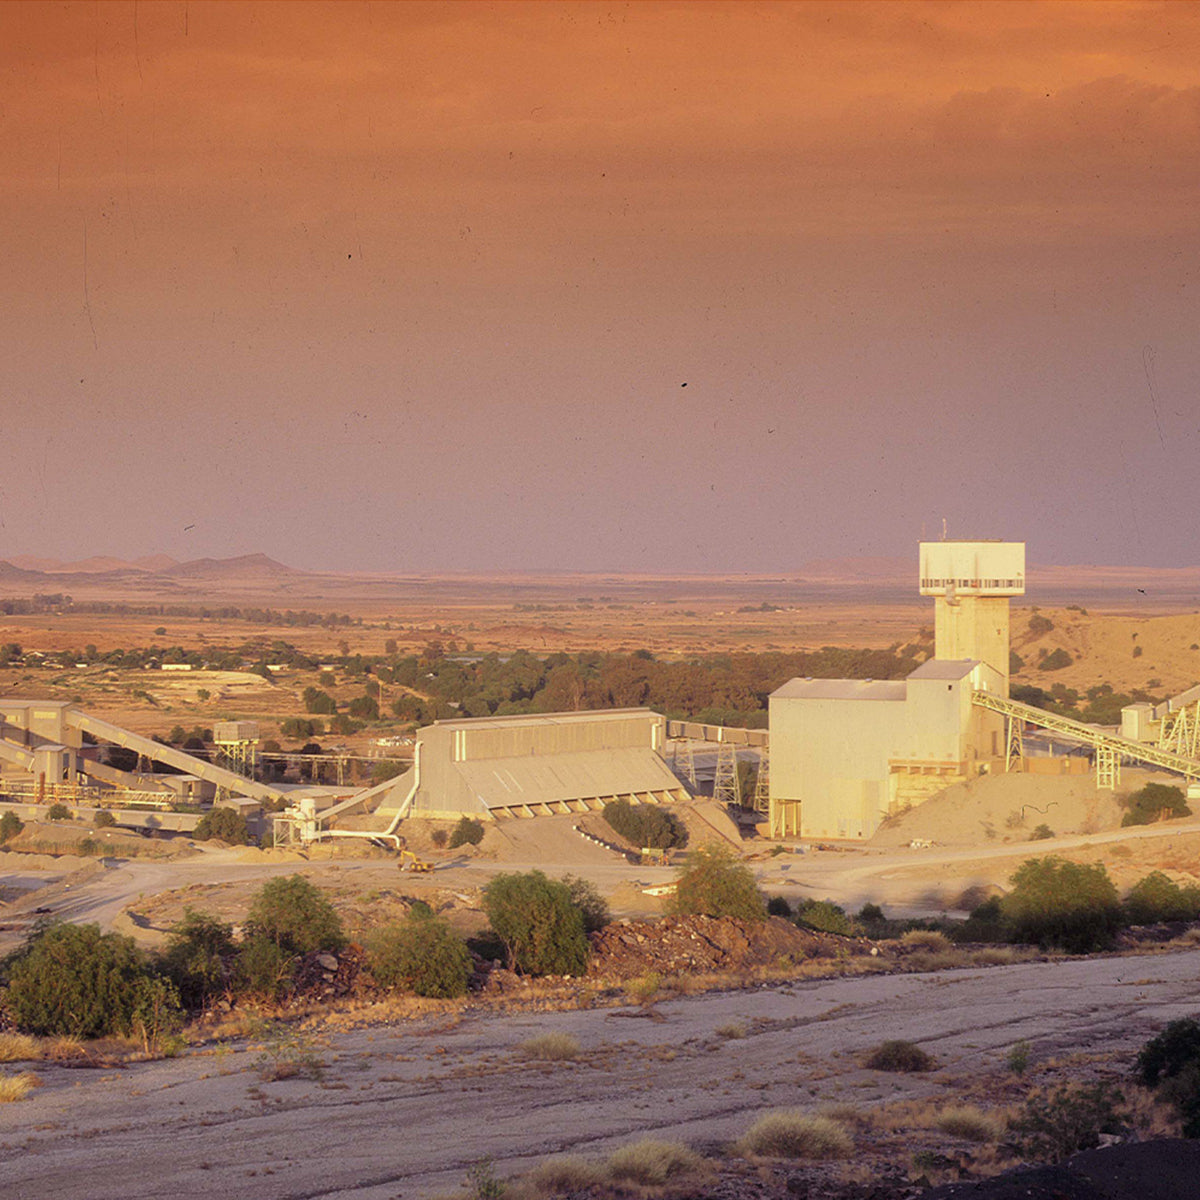 The Kimberly Diamond Mine